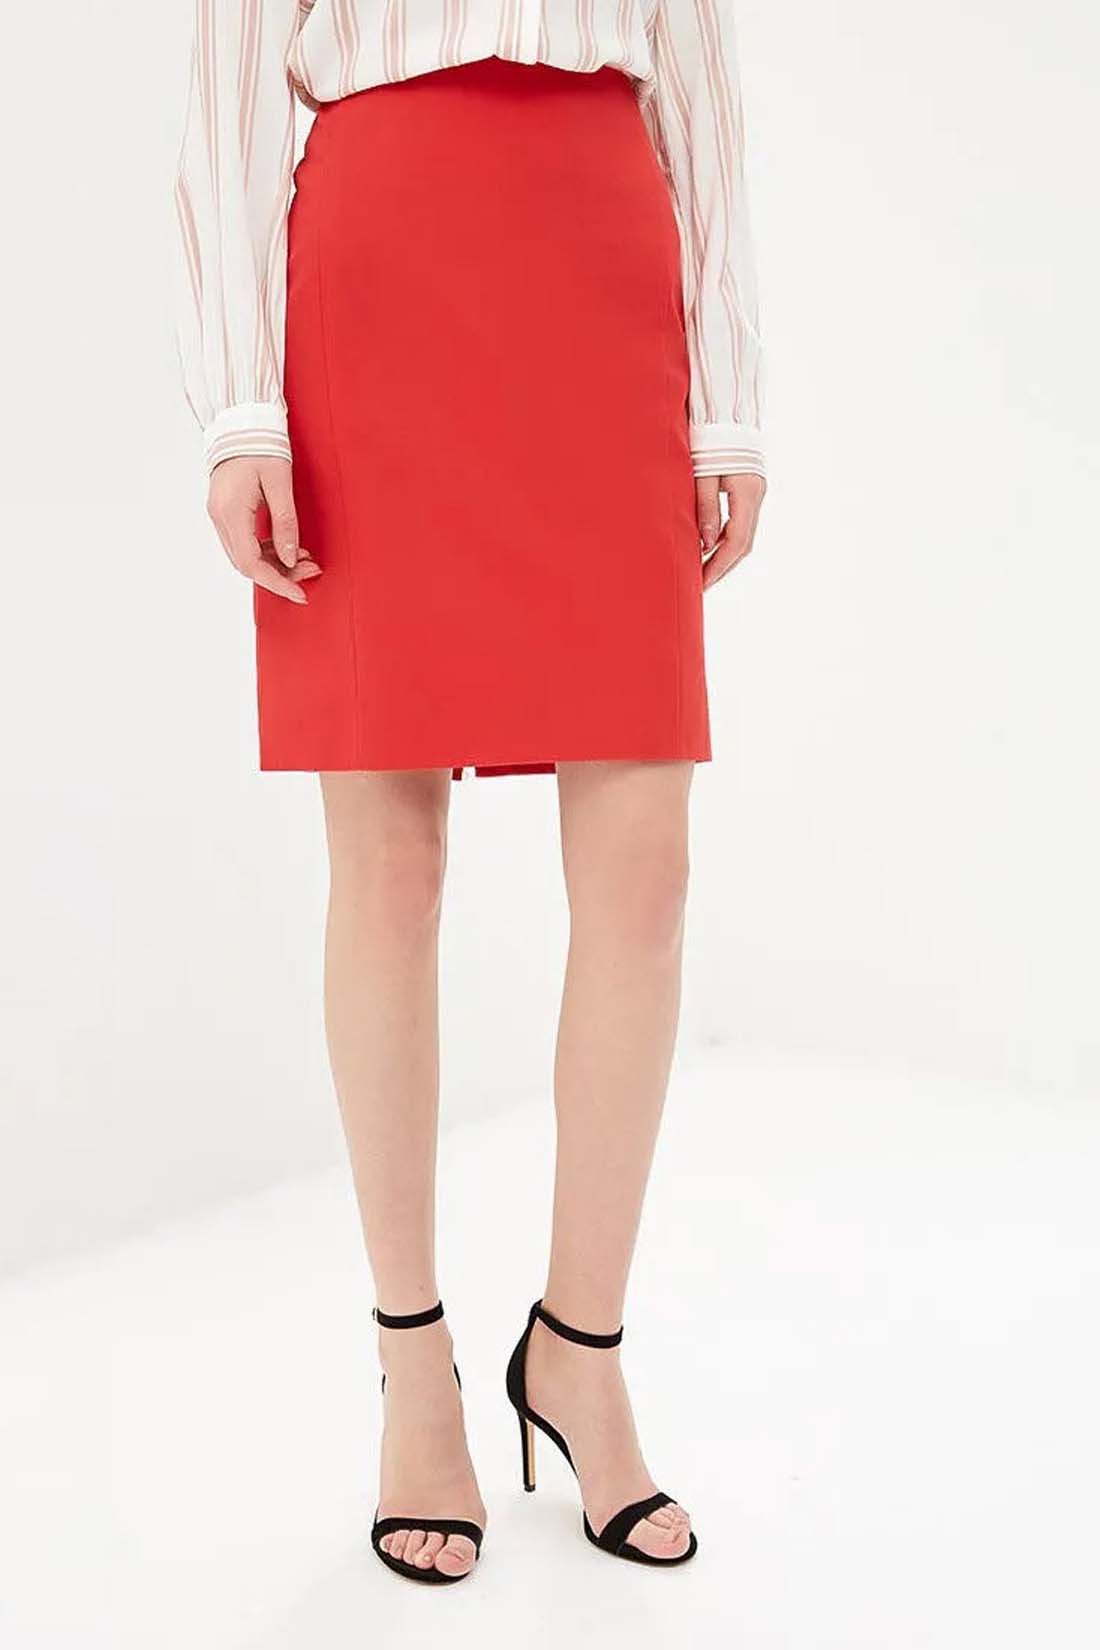 Яркая юбка-карандаш (арт. baon B479012), размер M, цвет красный Яркая юбка-карандаш (арт. baon B479012) - фото 1